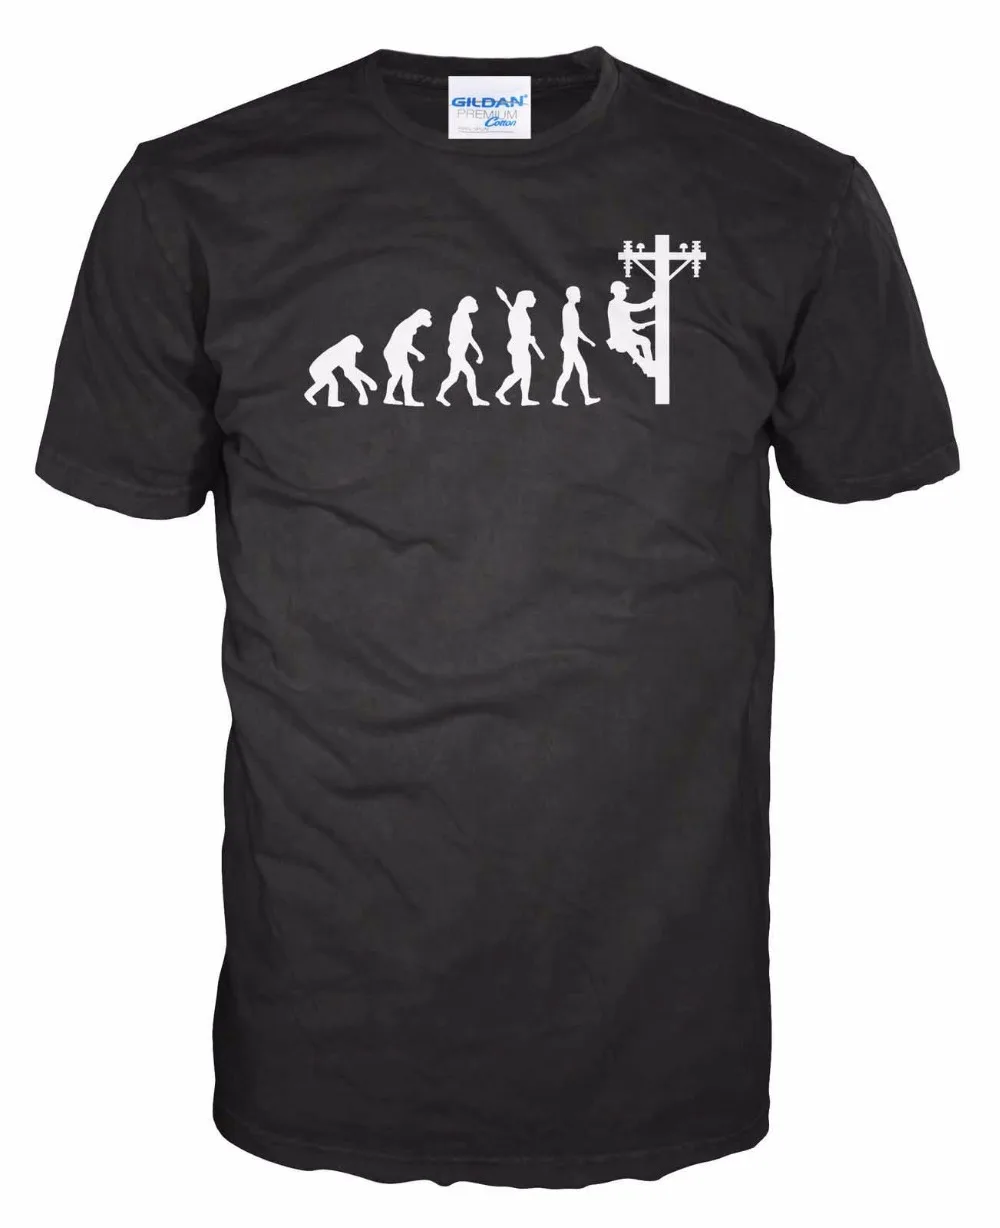 Camiseta de Stranger Things para hombre, ropa moderna, divertida, Sparky,  militar, novedad|Camisetas| - AliExpress